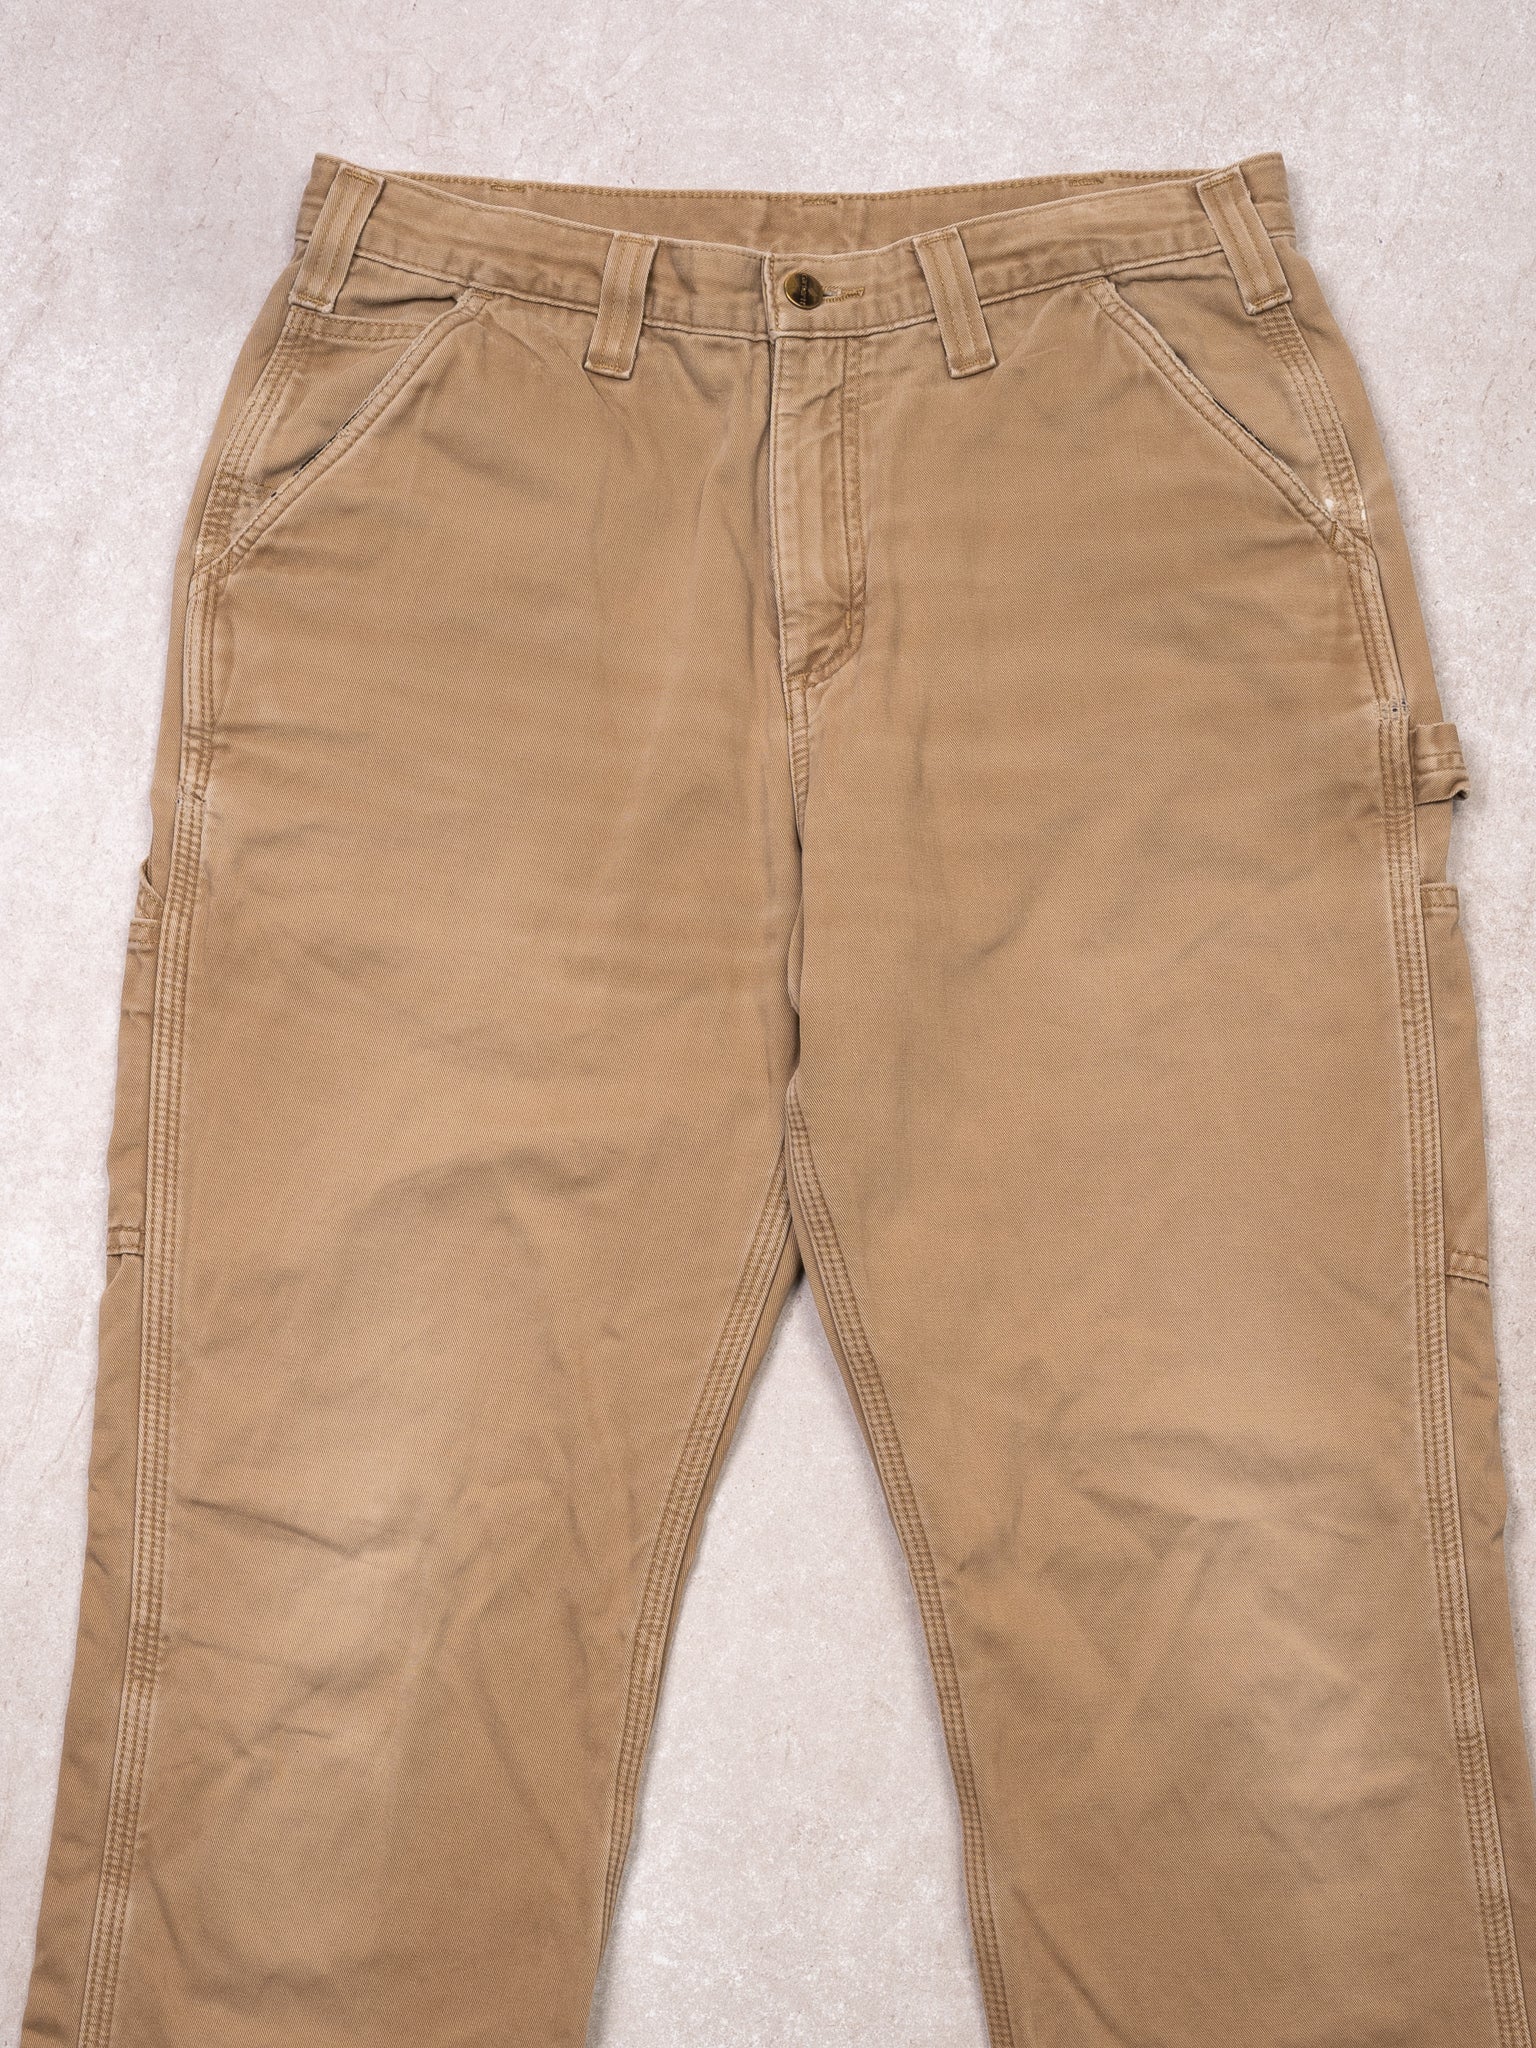 Vintage Beige Carhartt Relax Fit Cargo Pants (32 x 30)